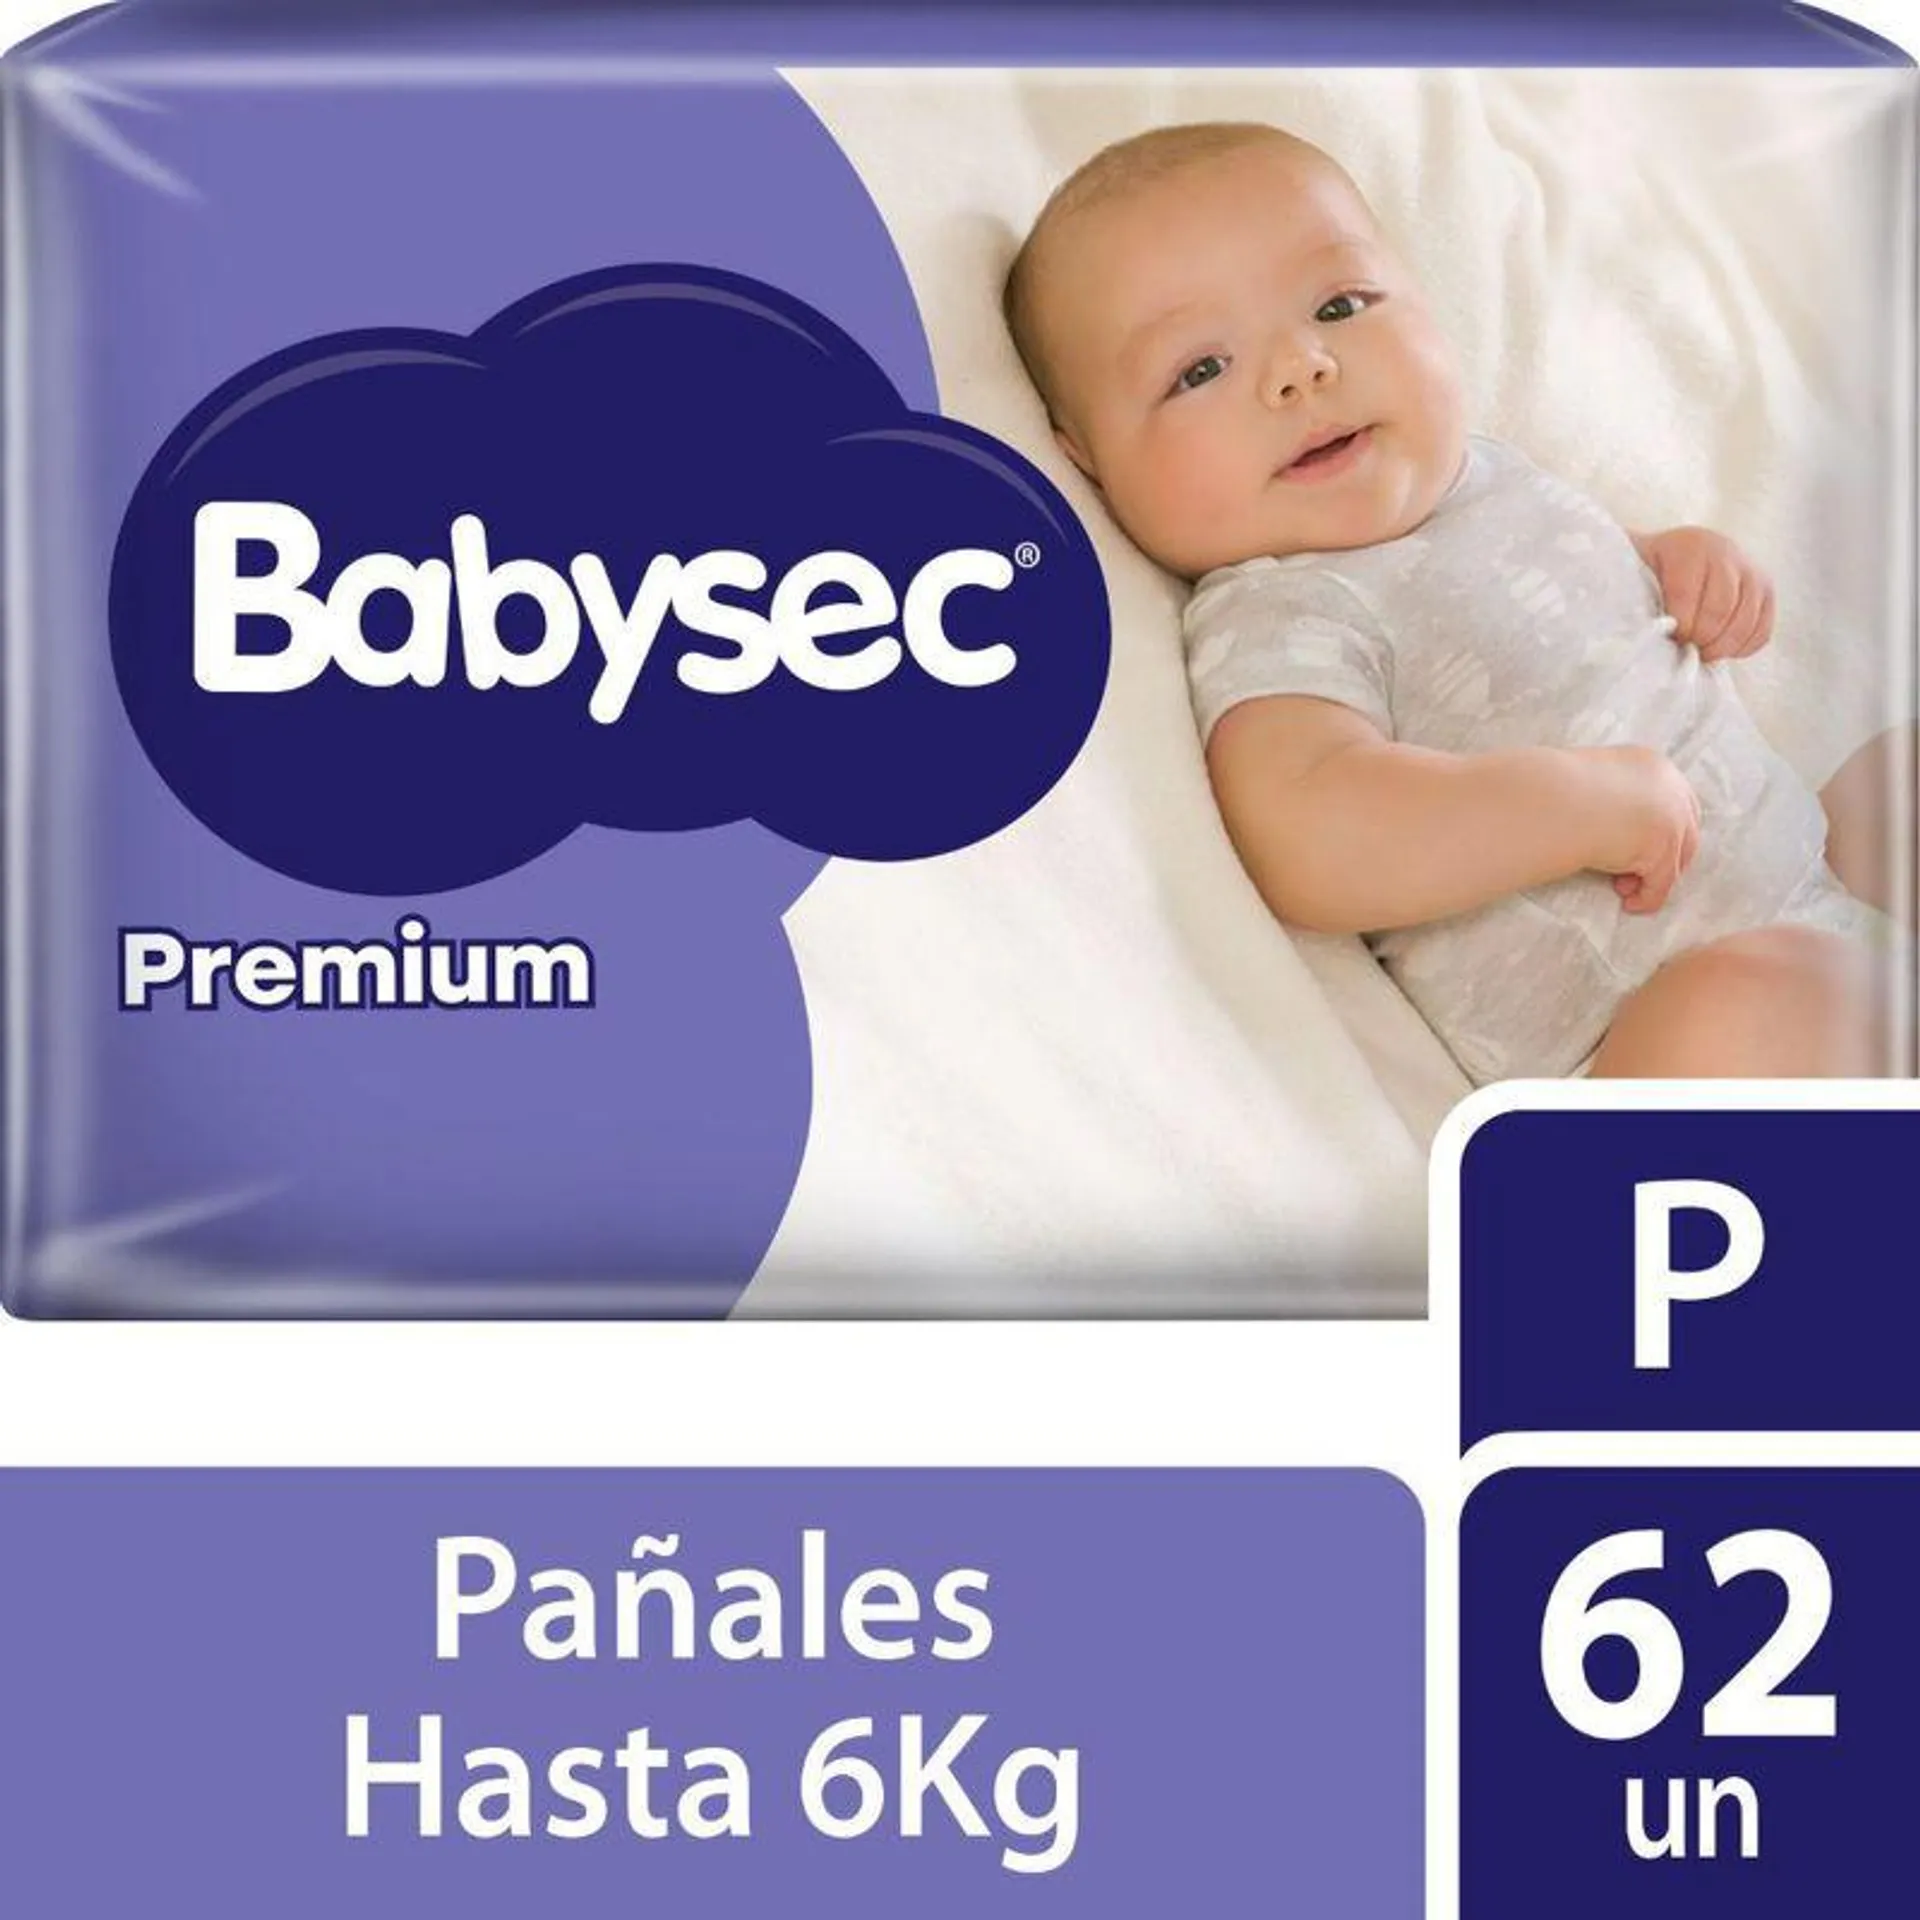 Pañales para Bebé Babysec Premium Talla P 62un